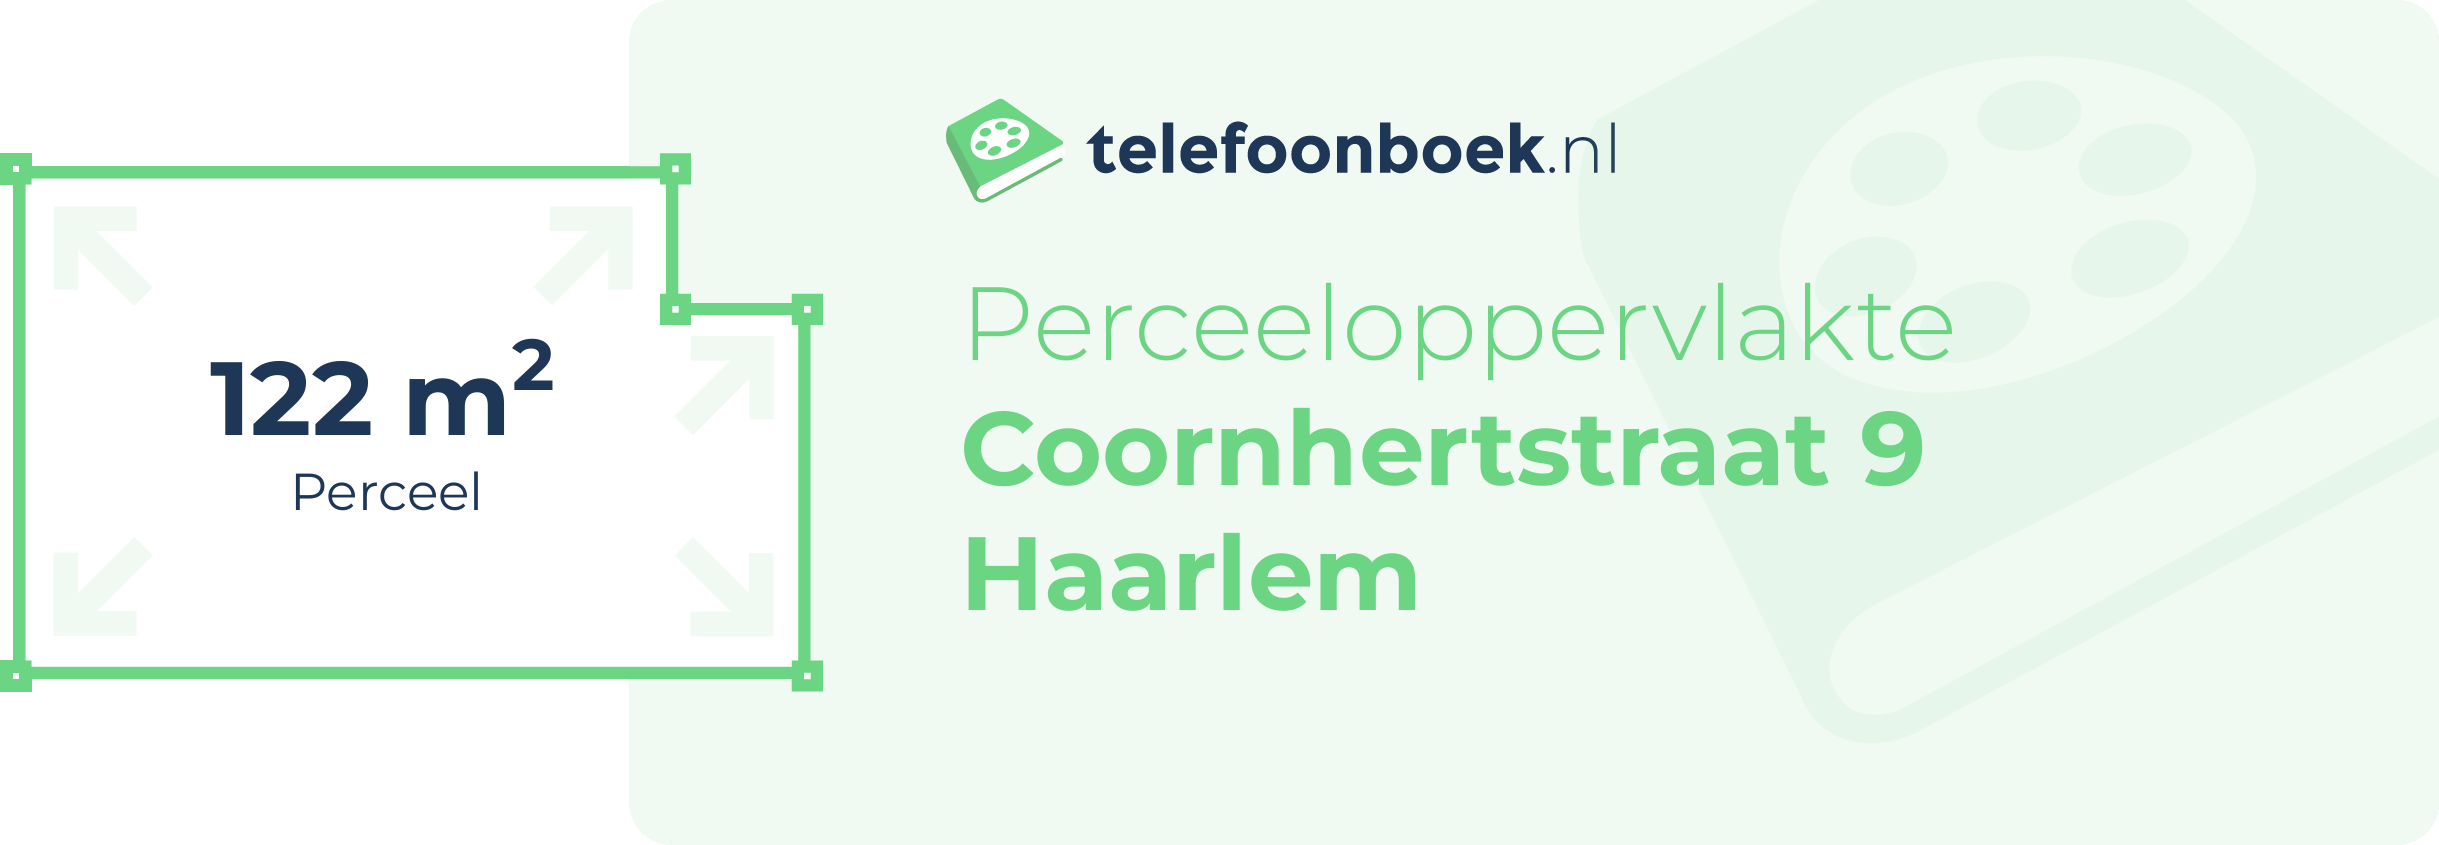 Perceeloppervlakte Coornhertstraat 9 Haarlem